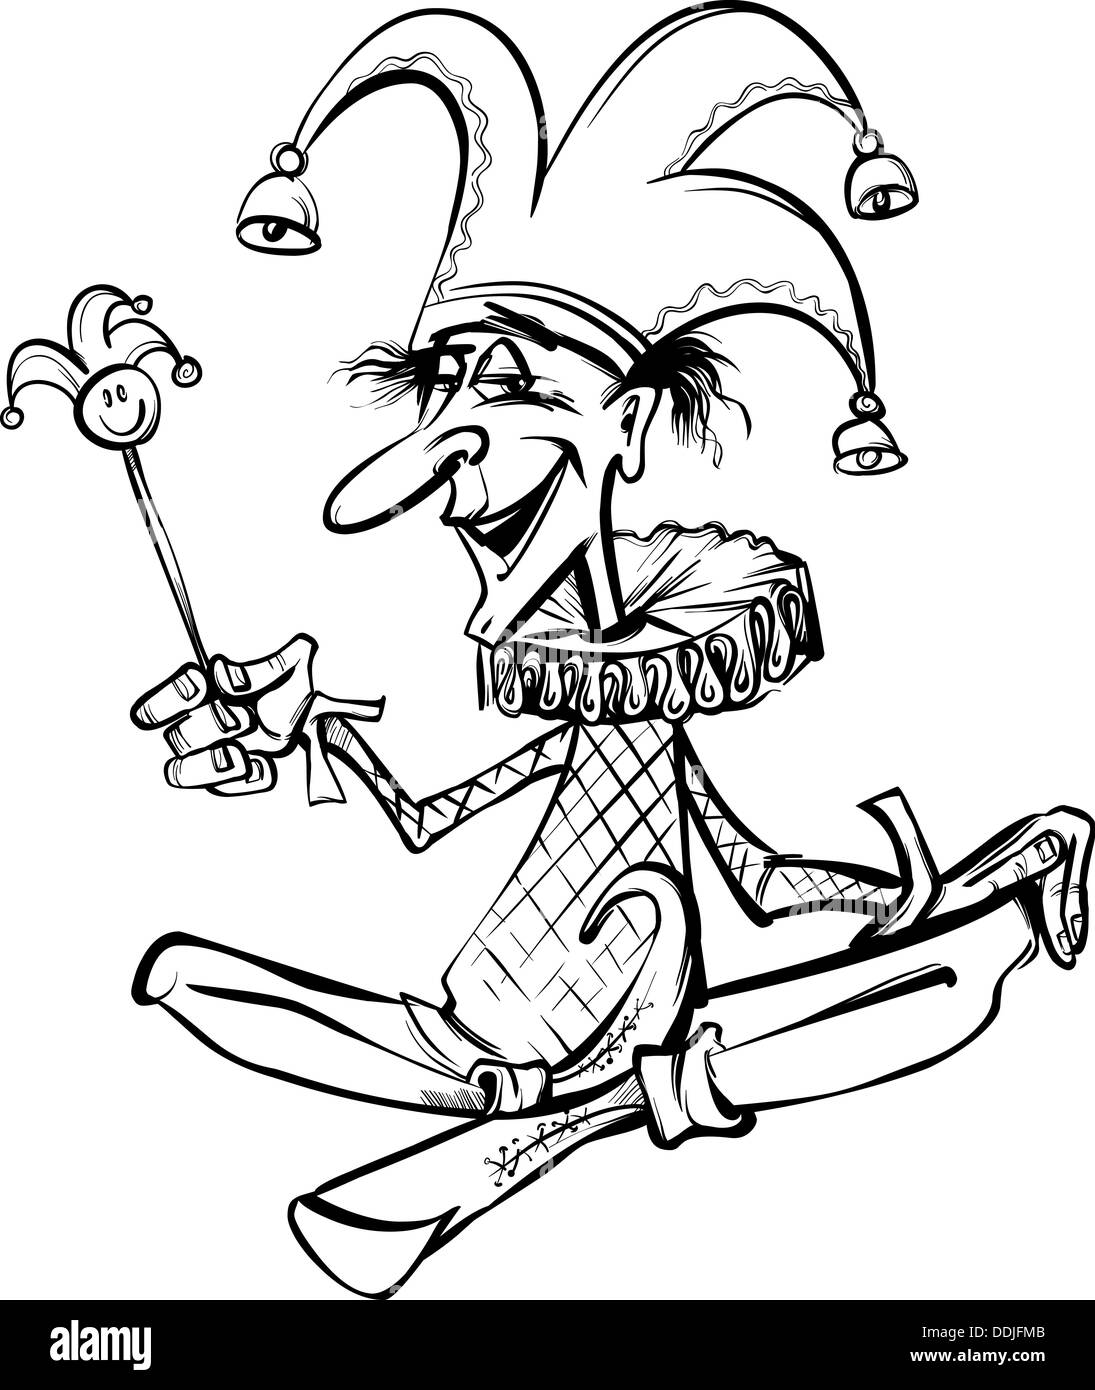 Black and White Cartoon Illustration of Funny Court Jester or Joker Stock Photo